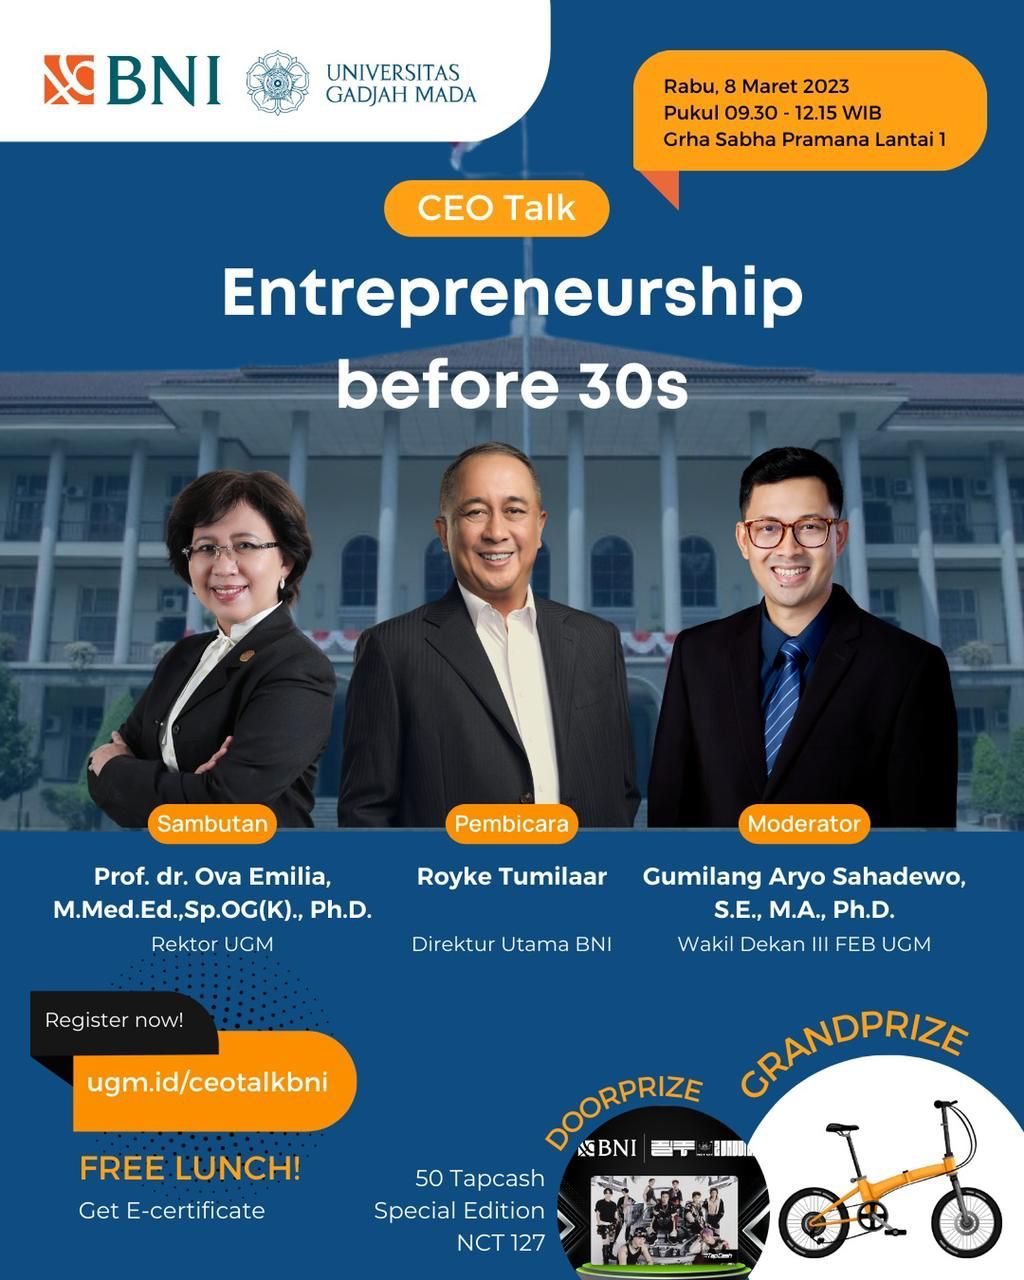 CEO Talk: Enterpreneurship before 30s